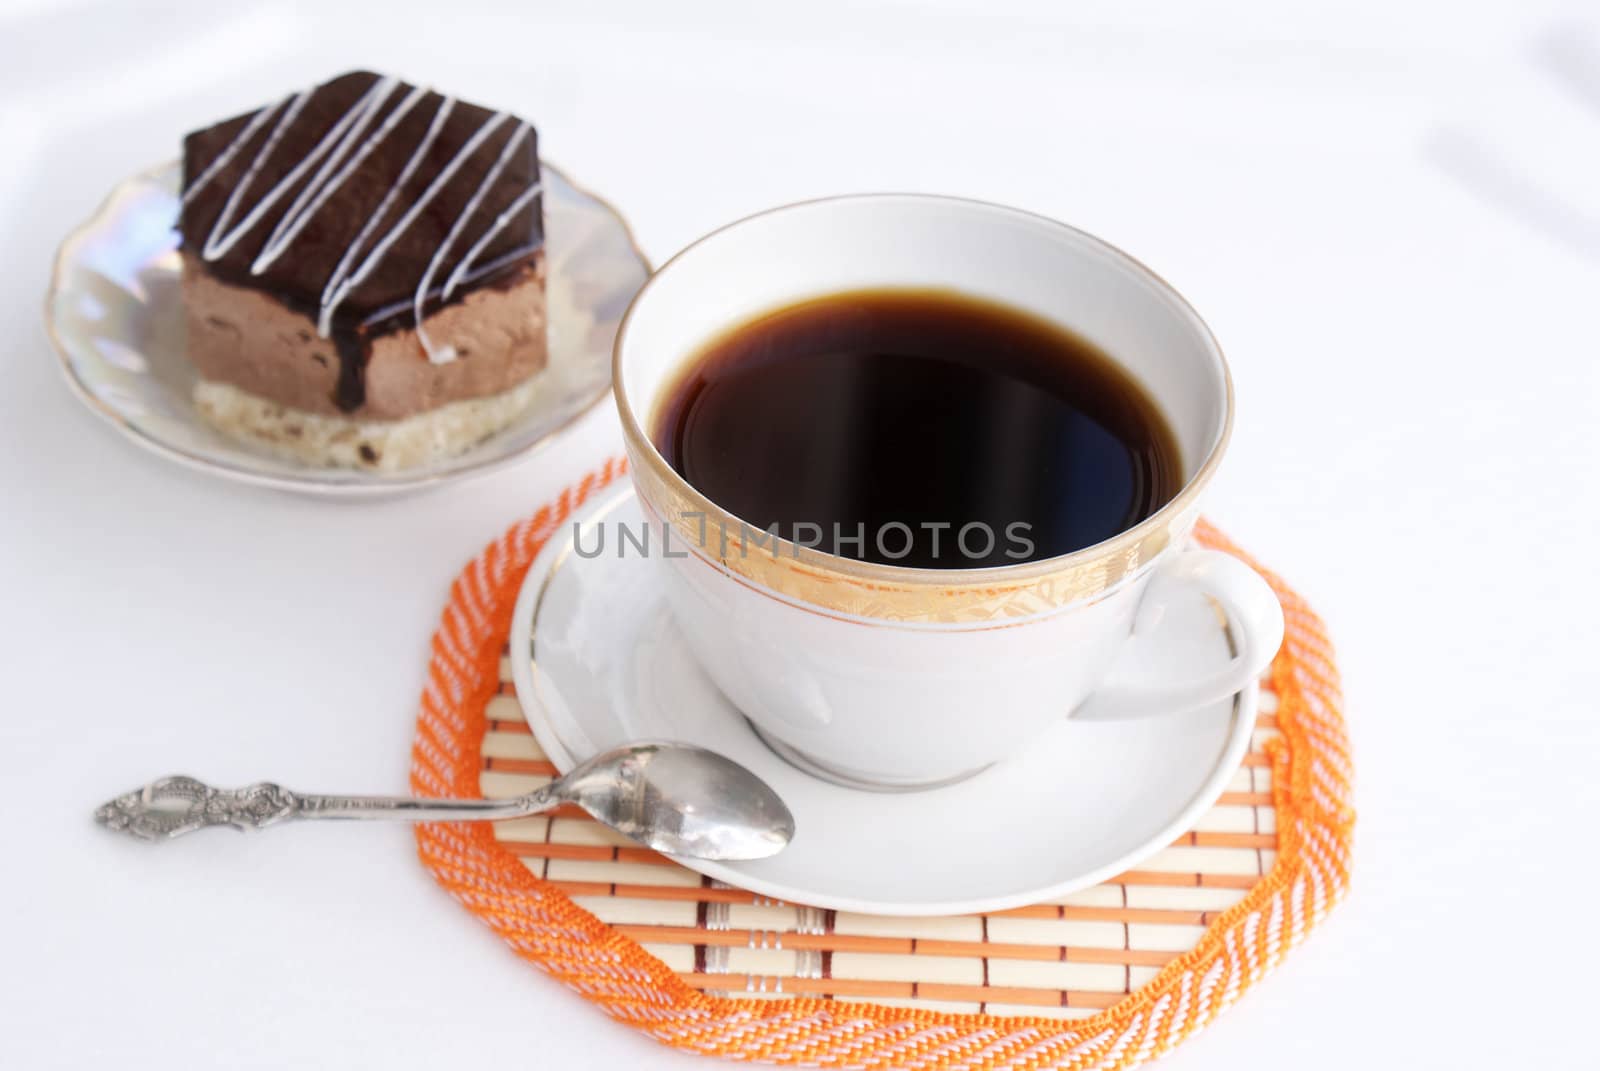 Black morning coffee and fresh sweet chocolate cake